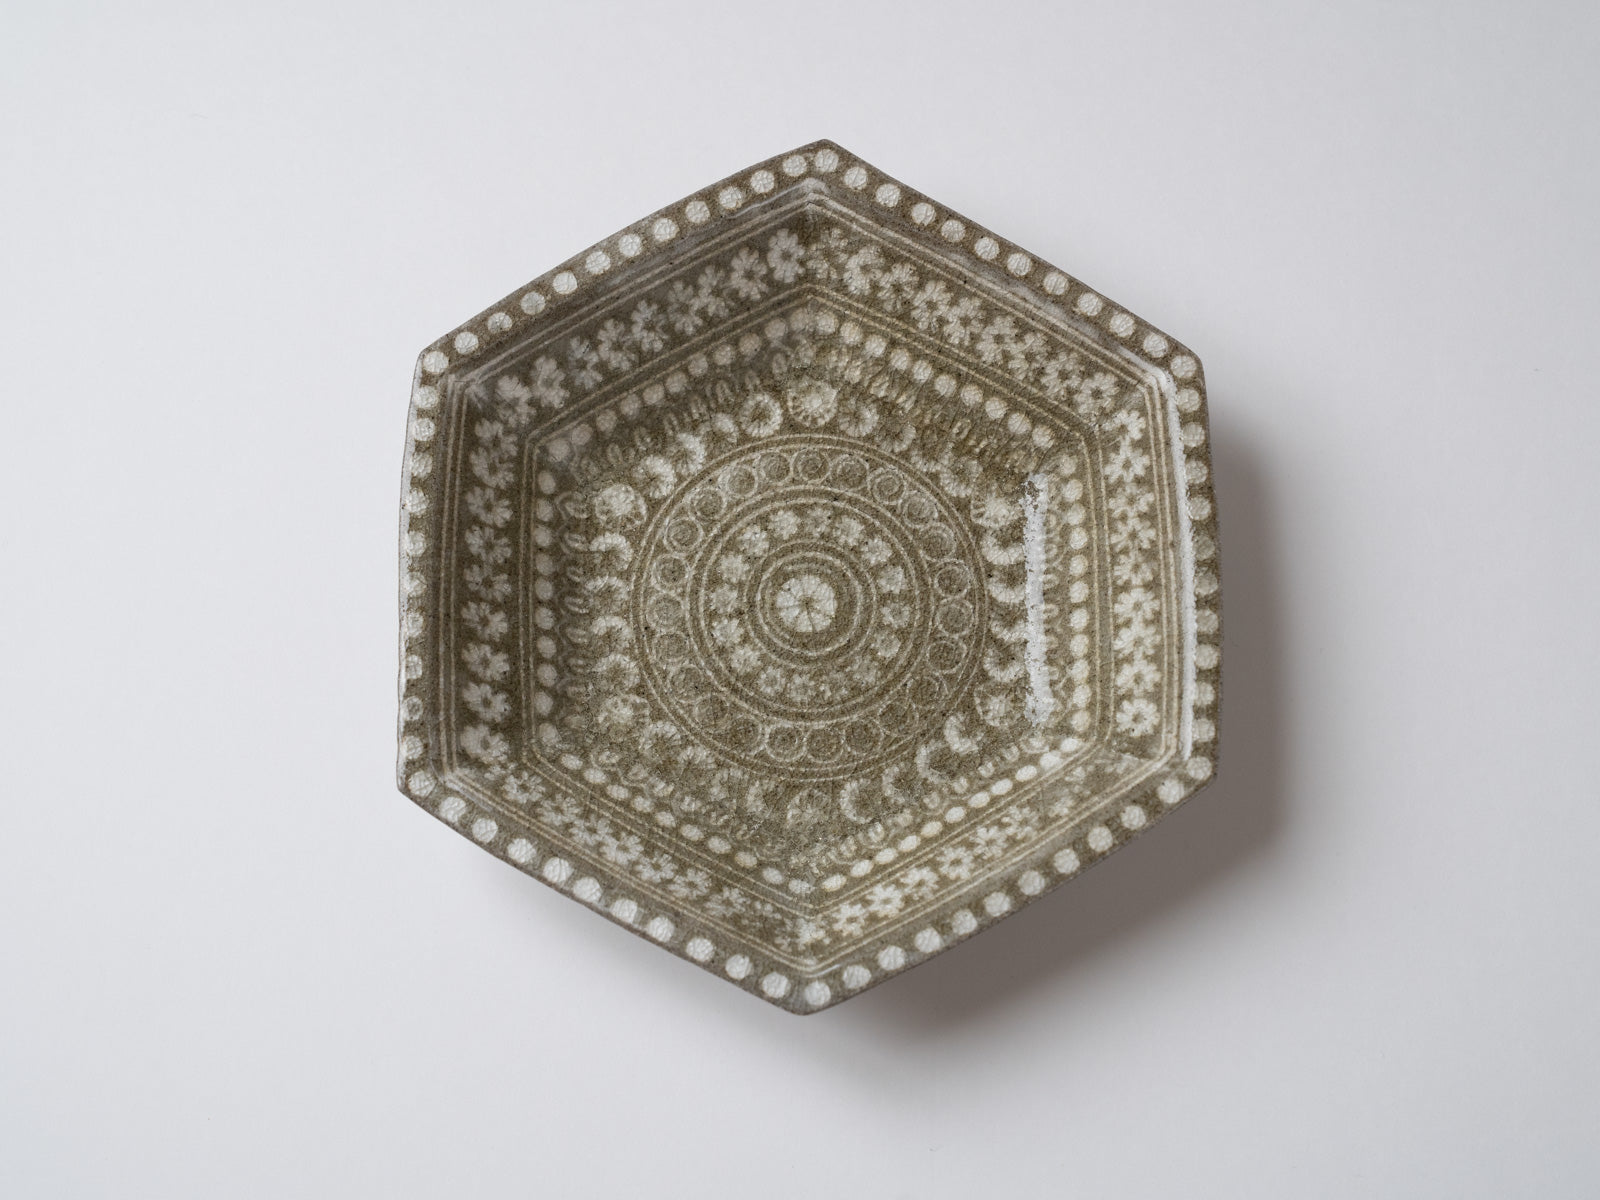 Mishima hand hexagonal bowl [Hideki Yamamoto]